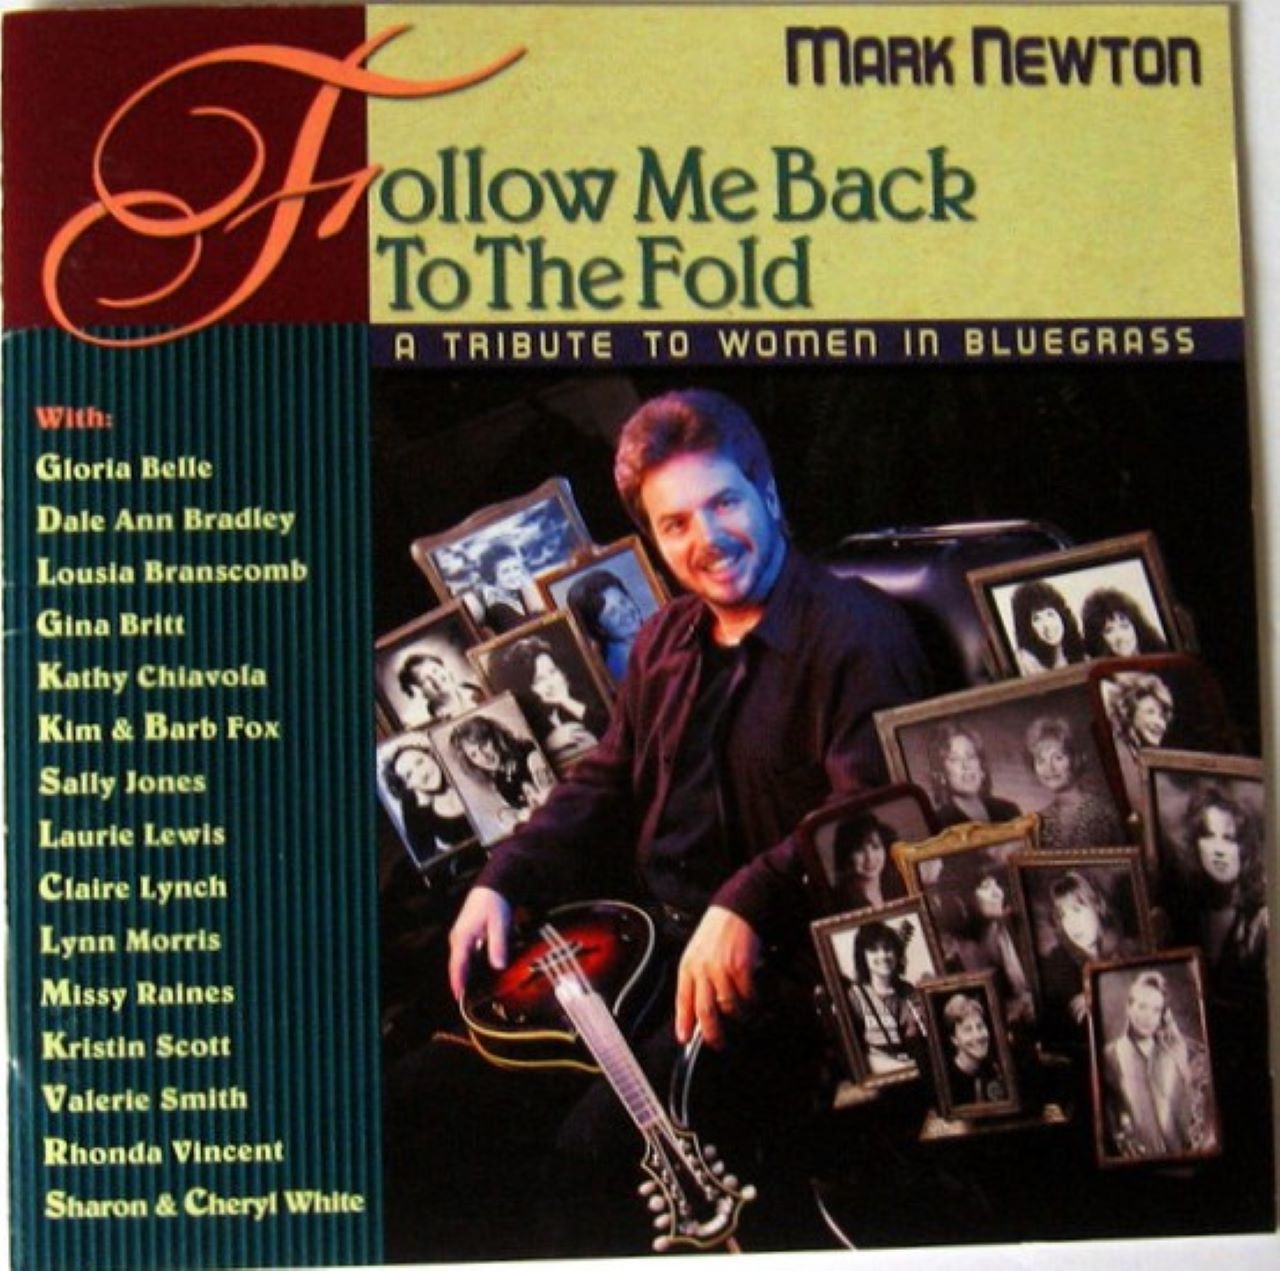 Mark Newton - Follow Me Back To The Fold cover album